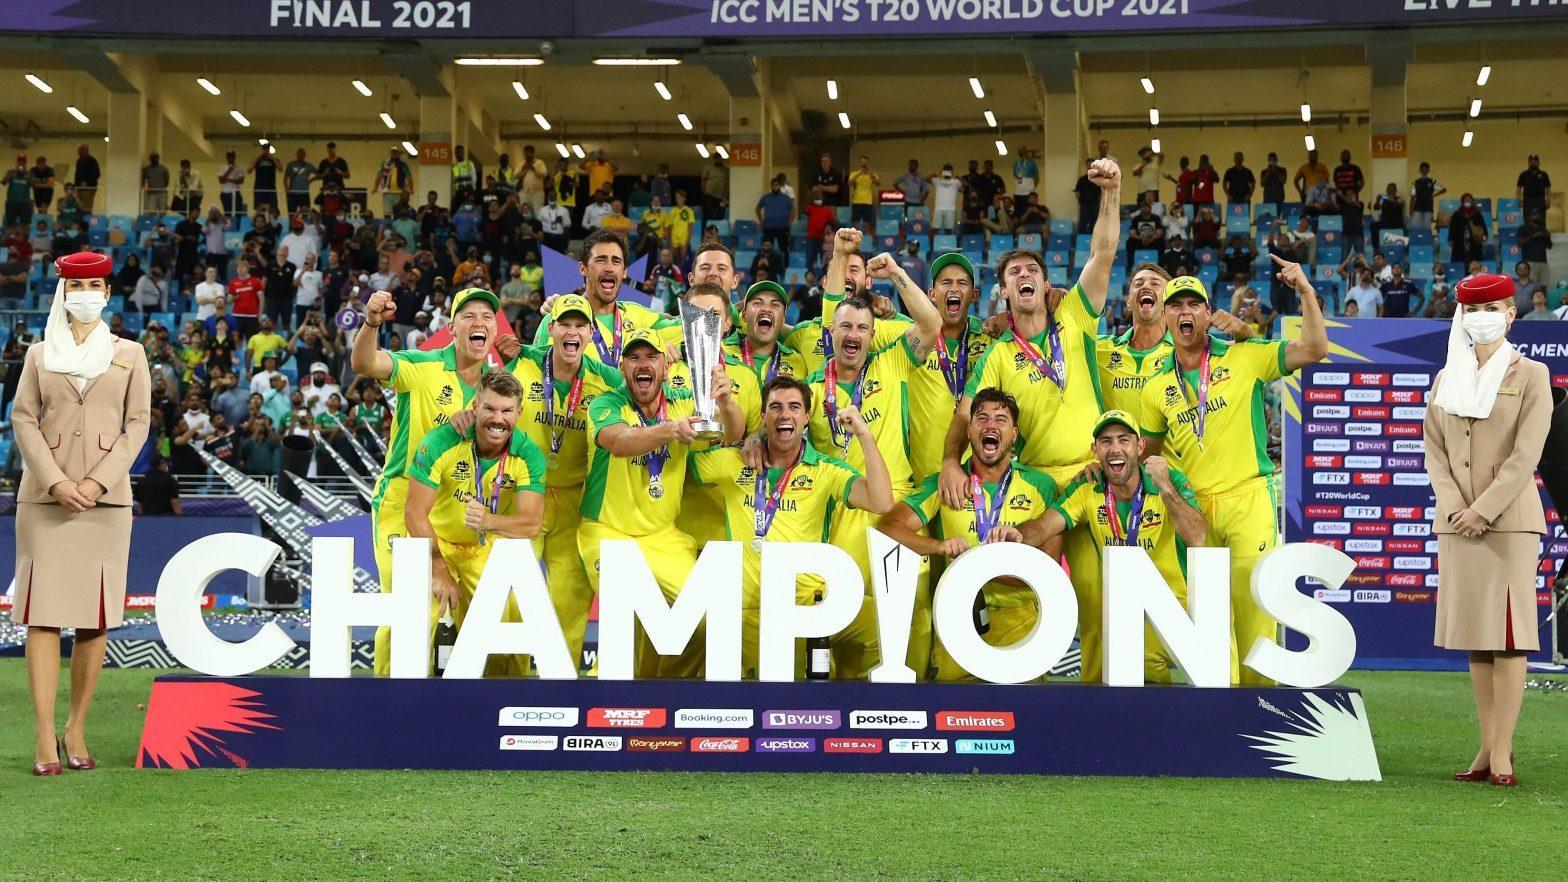 Australia wins their maiden T20 World Cup title